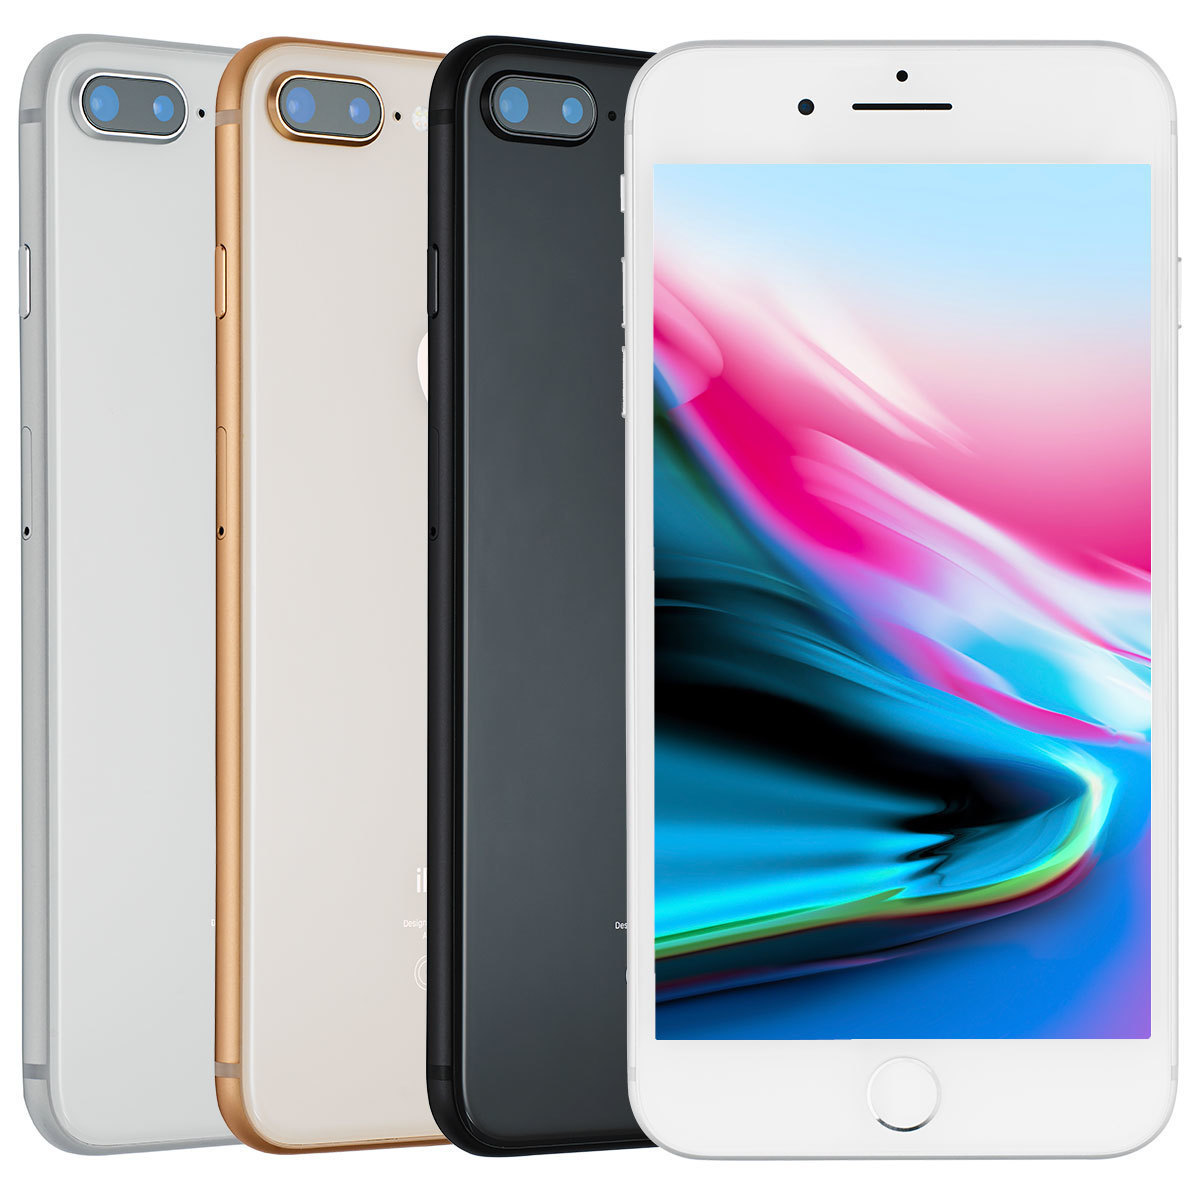 Apple iPhone 8 Plus 256GB Sim Free Mobile Phone Costco UK